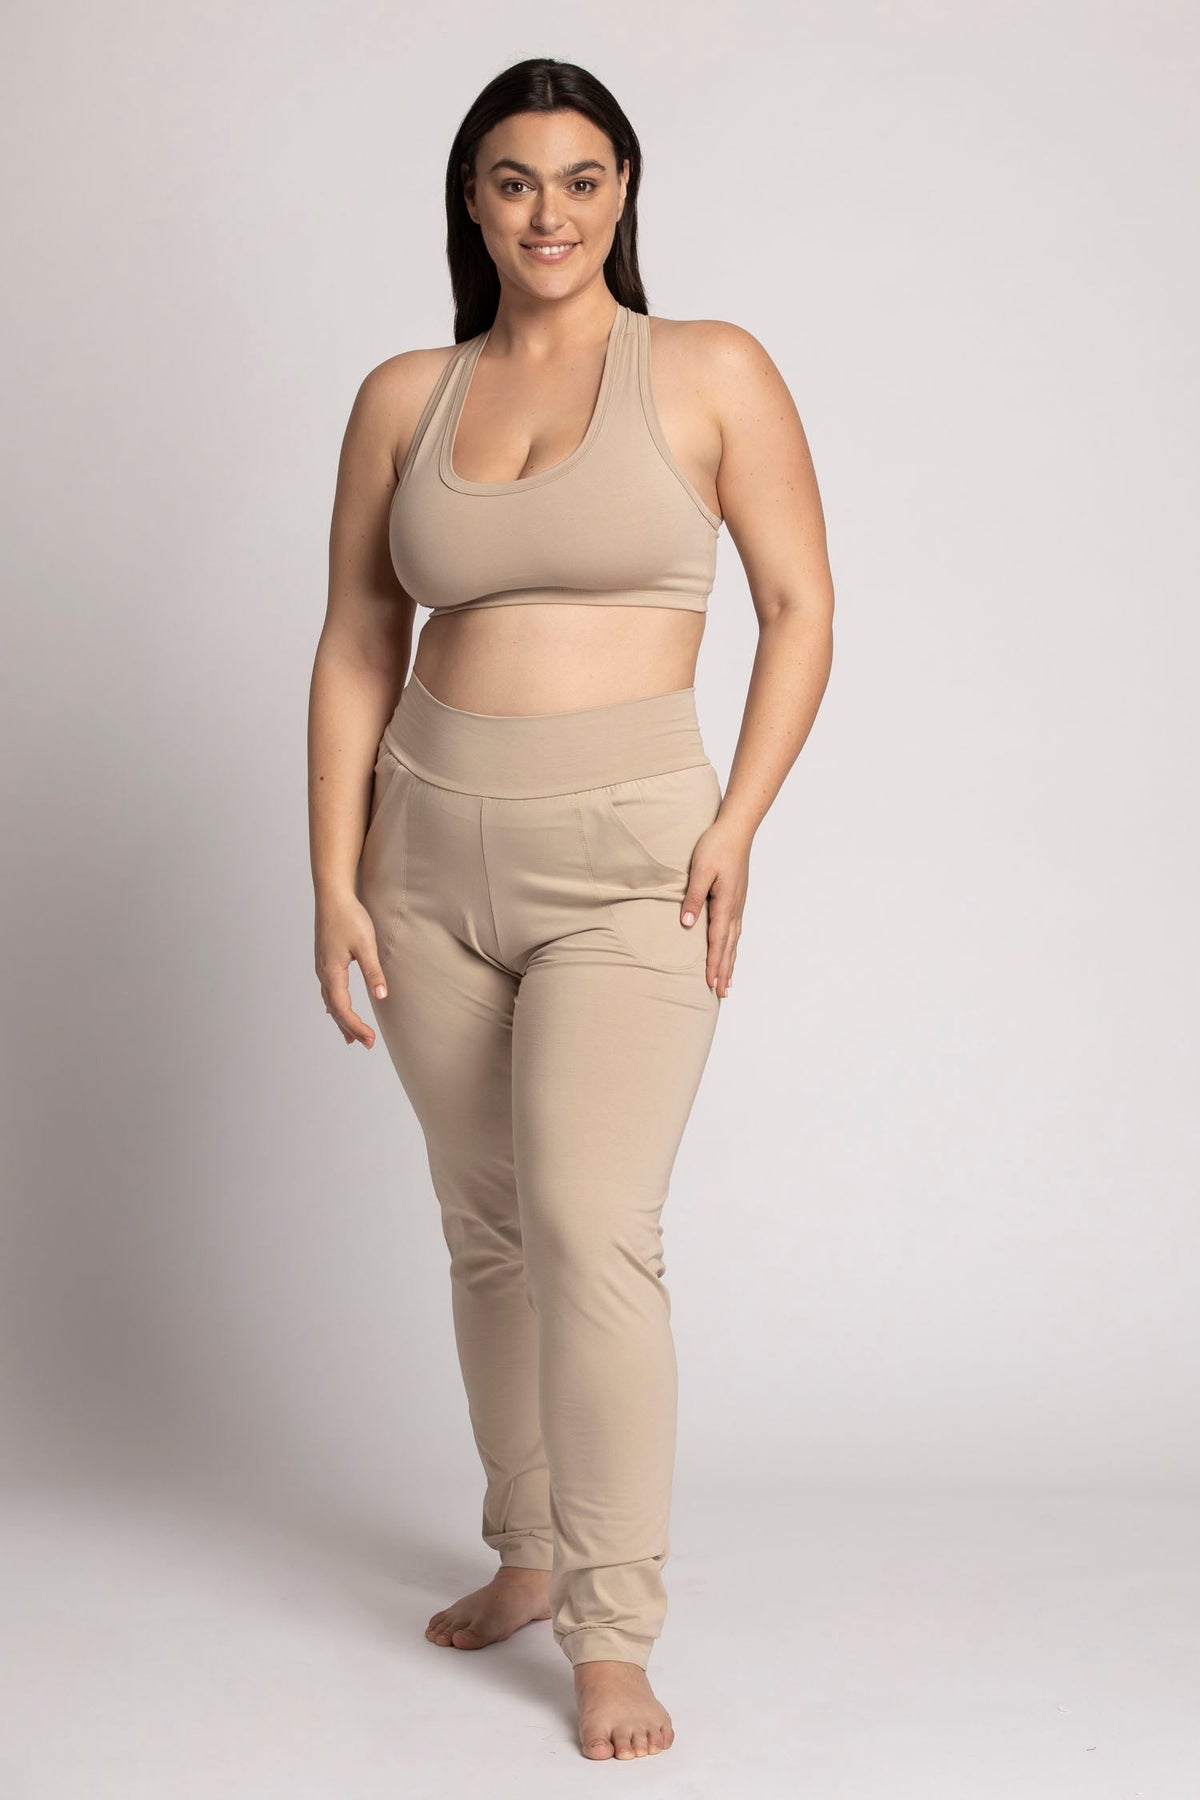 Almond Organic Cotton Unisex Slouchy Pants womens clothing Ripple Yoga Wear 